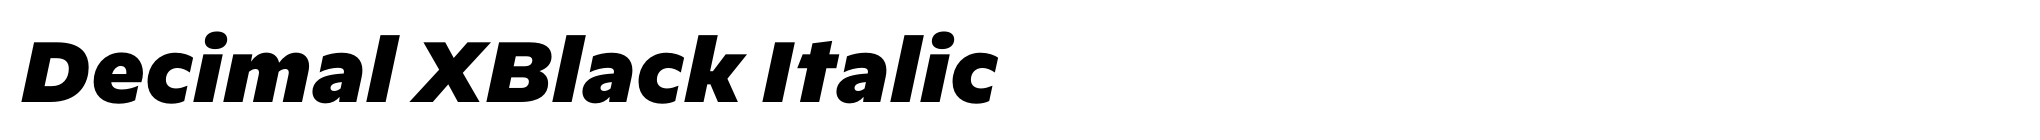 Decimal XBlack Italic image